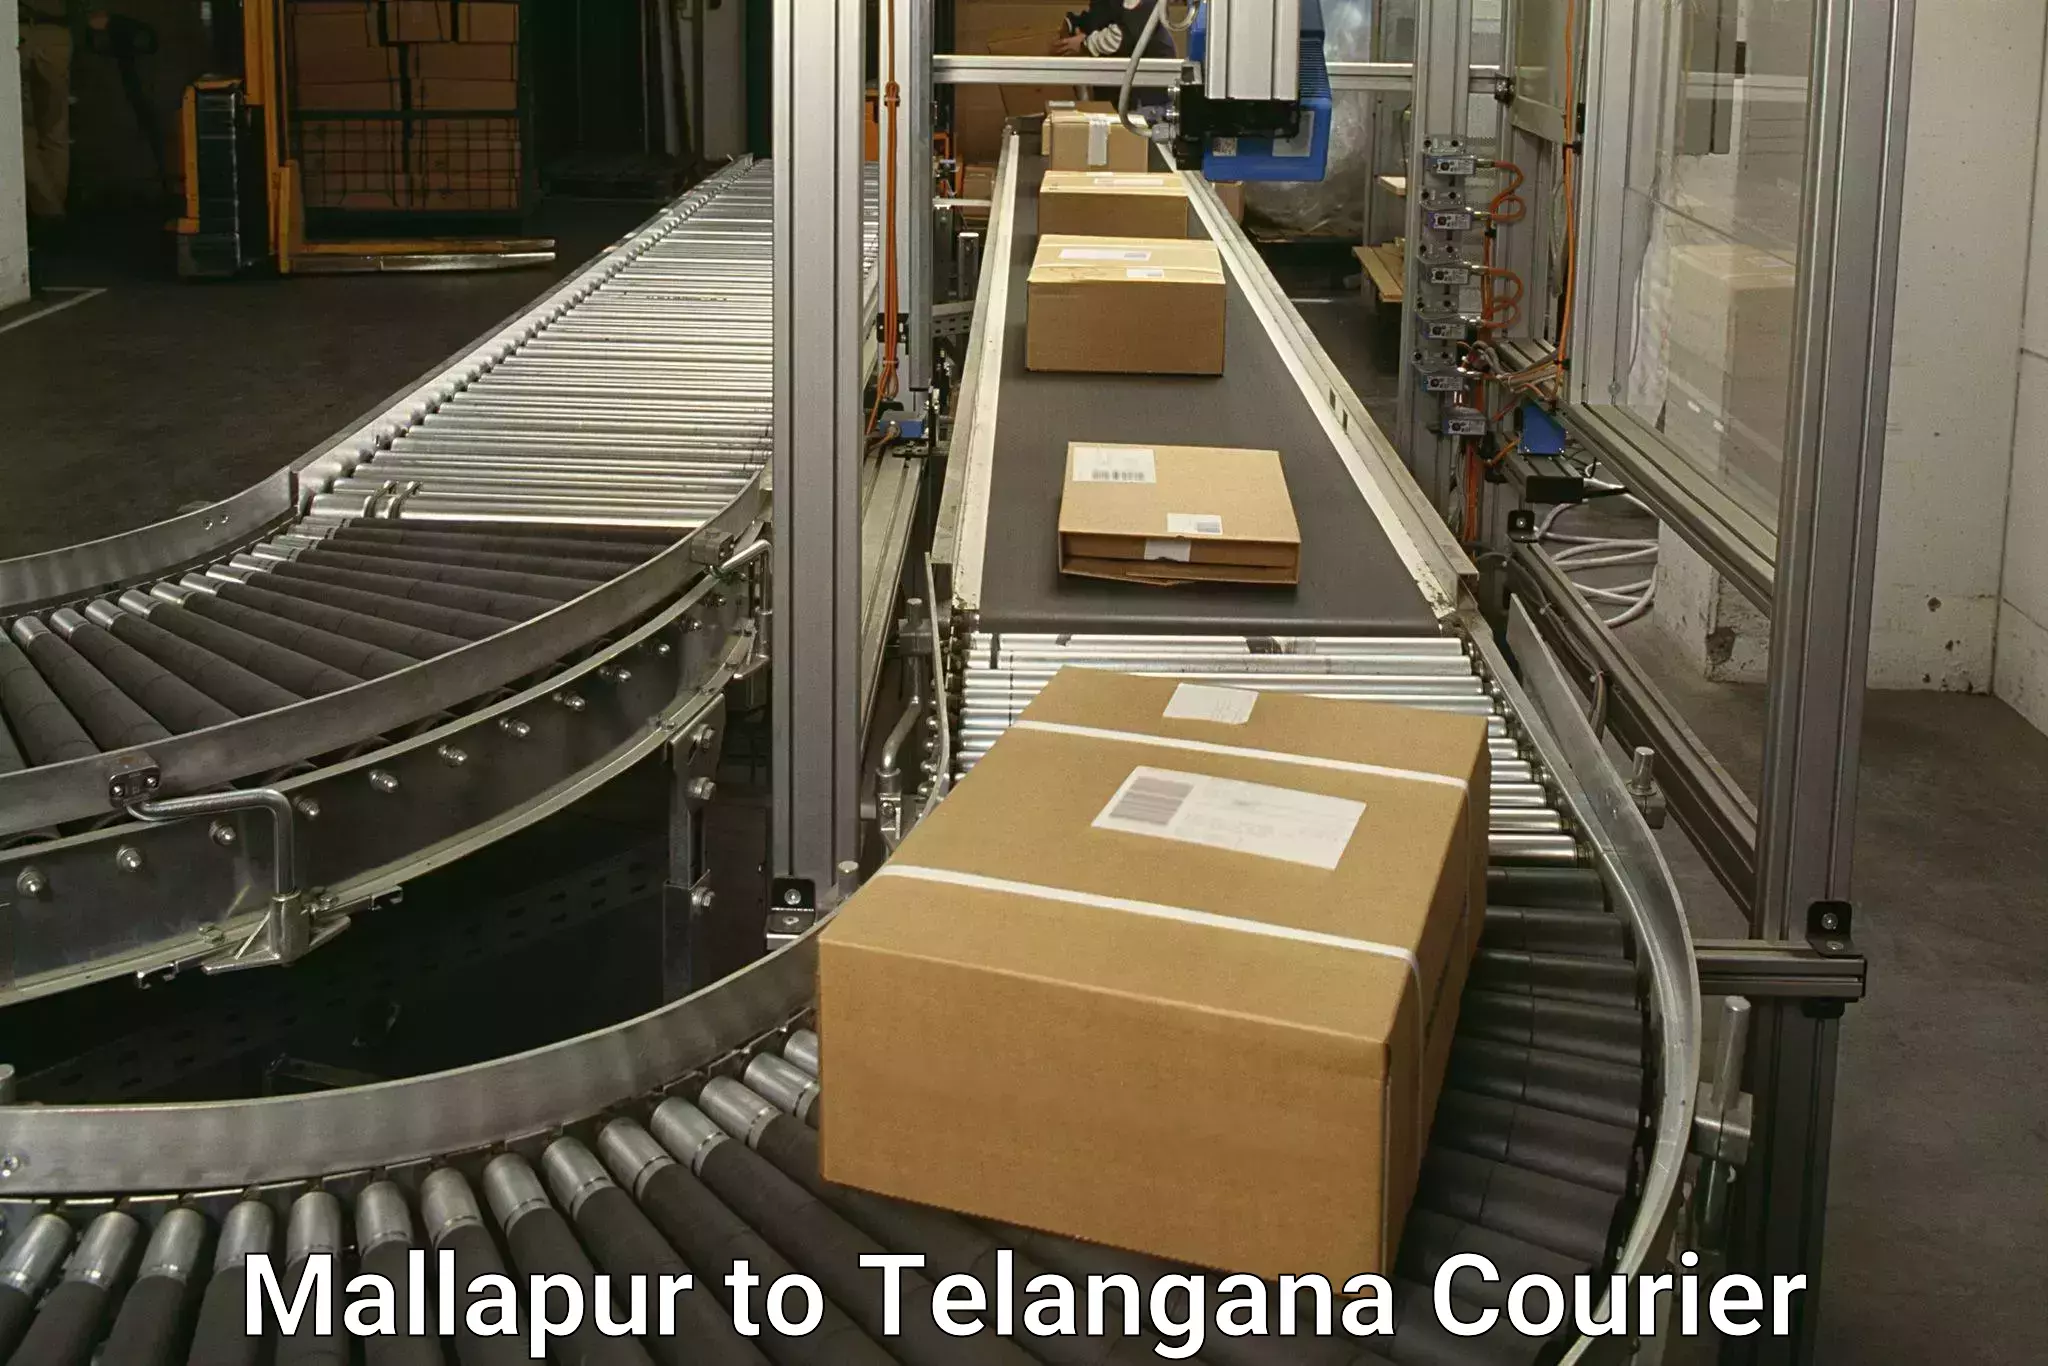 Quick dispatch service Mallapur to Gollapalli